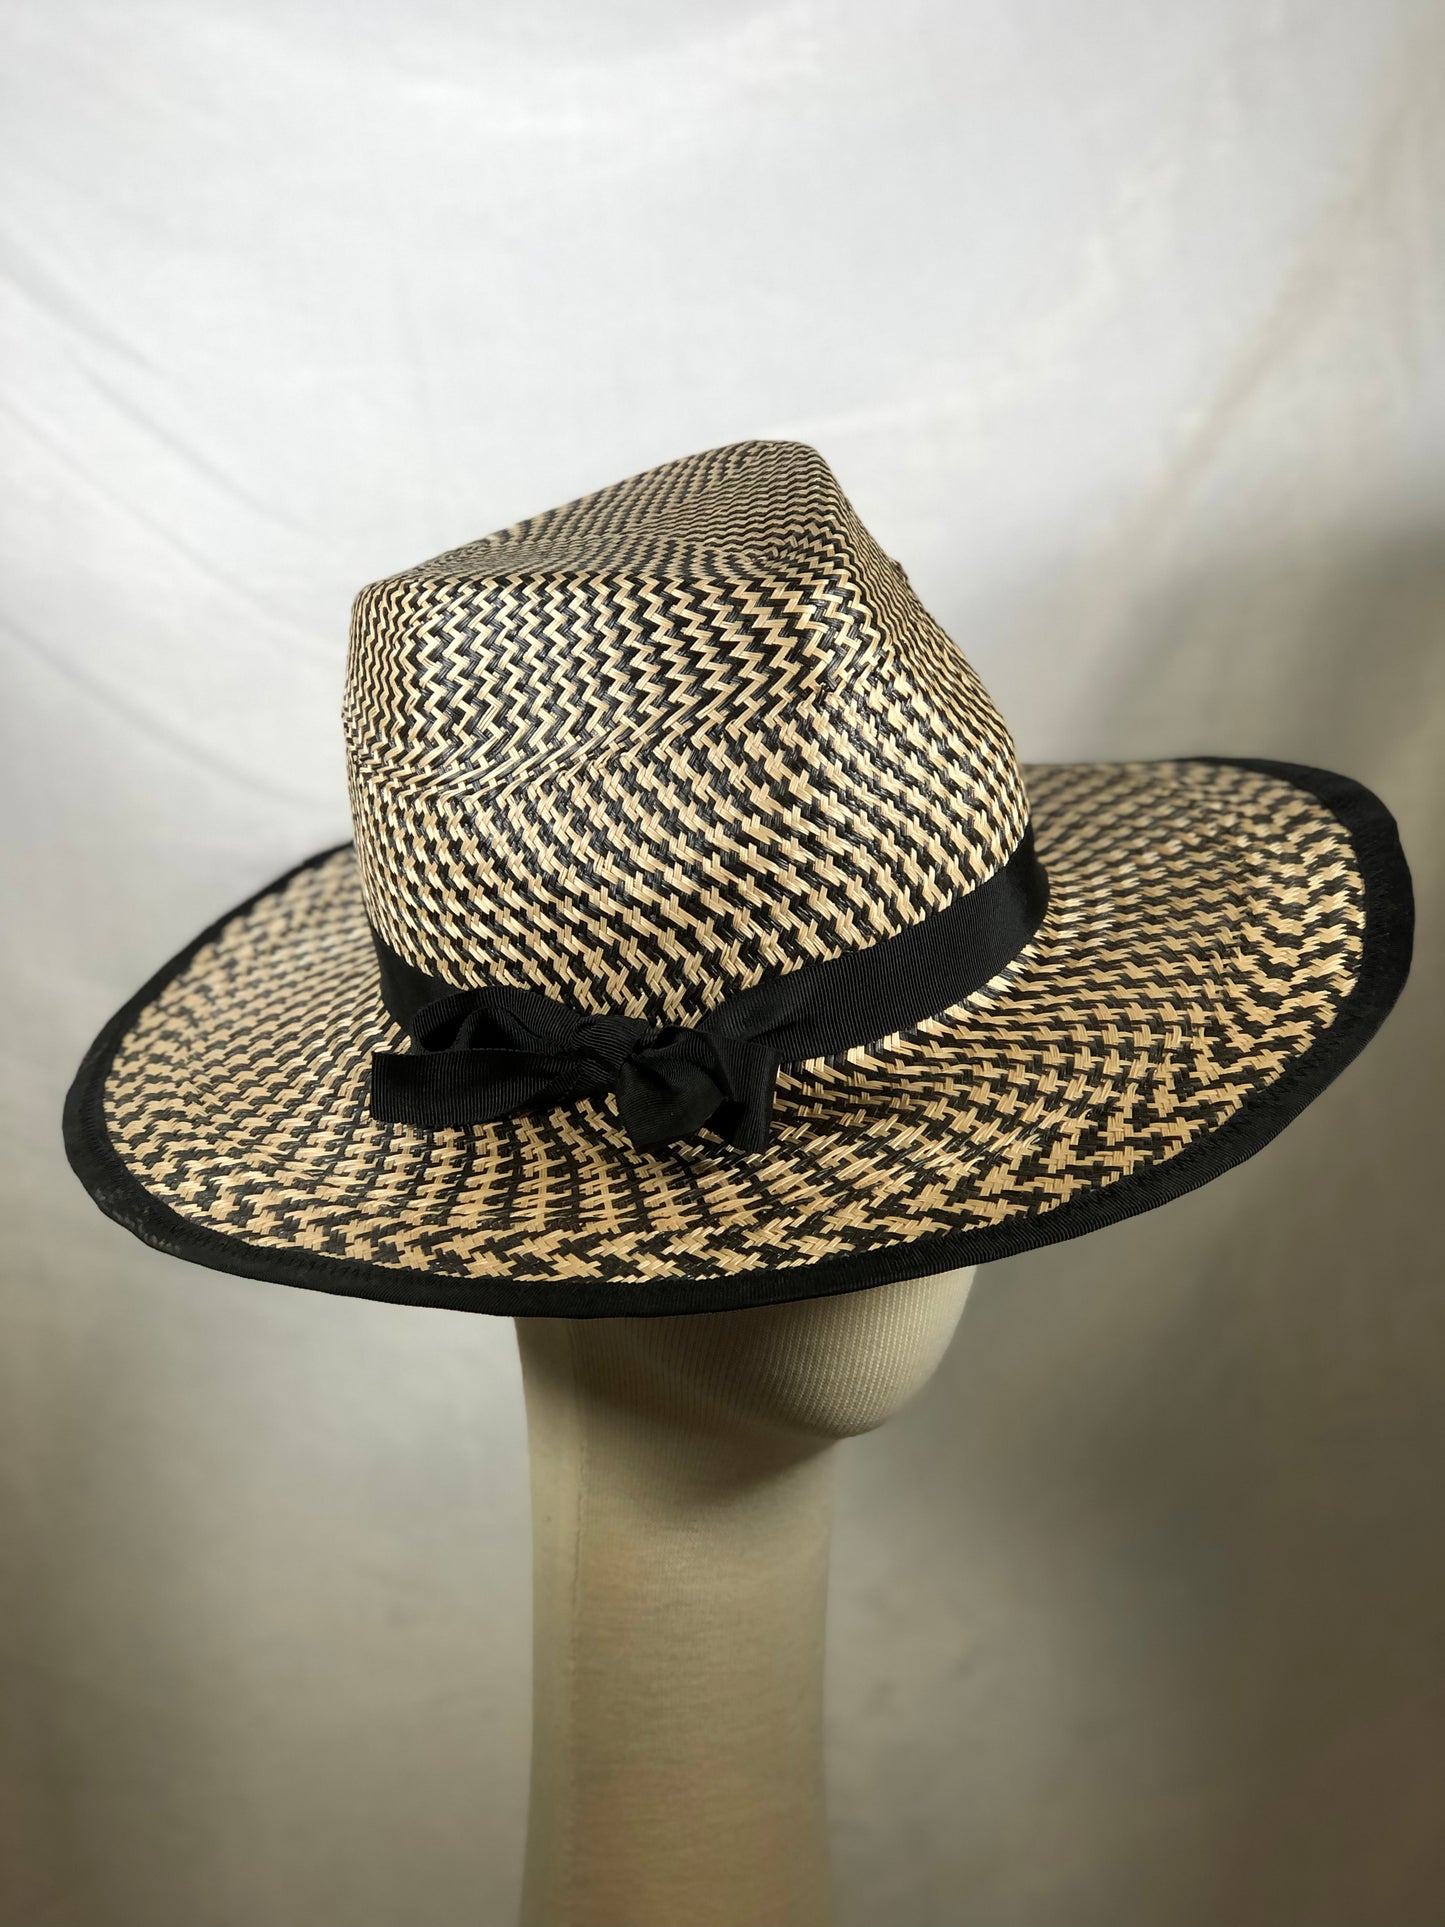 Black & Natural Straw Summer Hat by Possum Ball